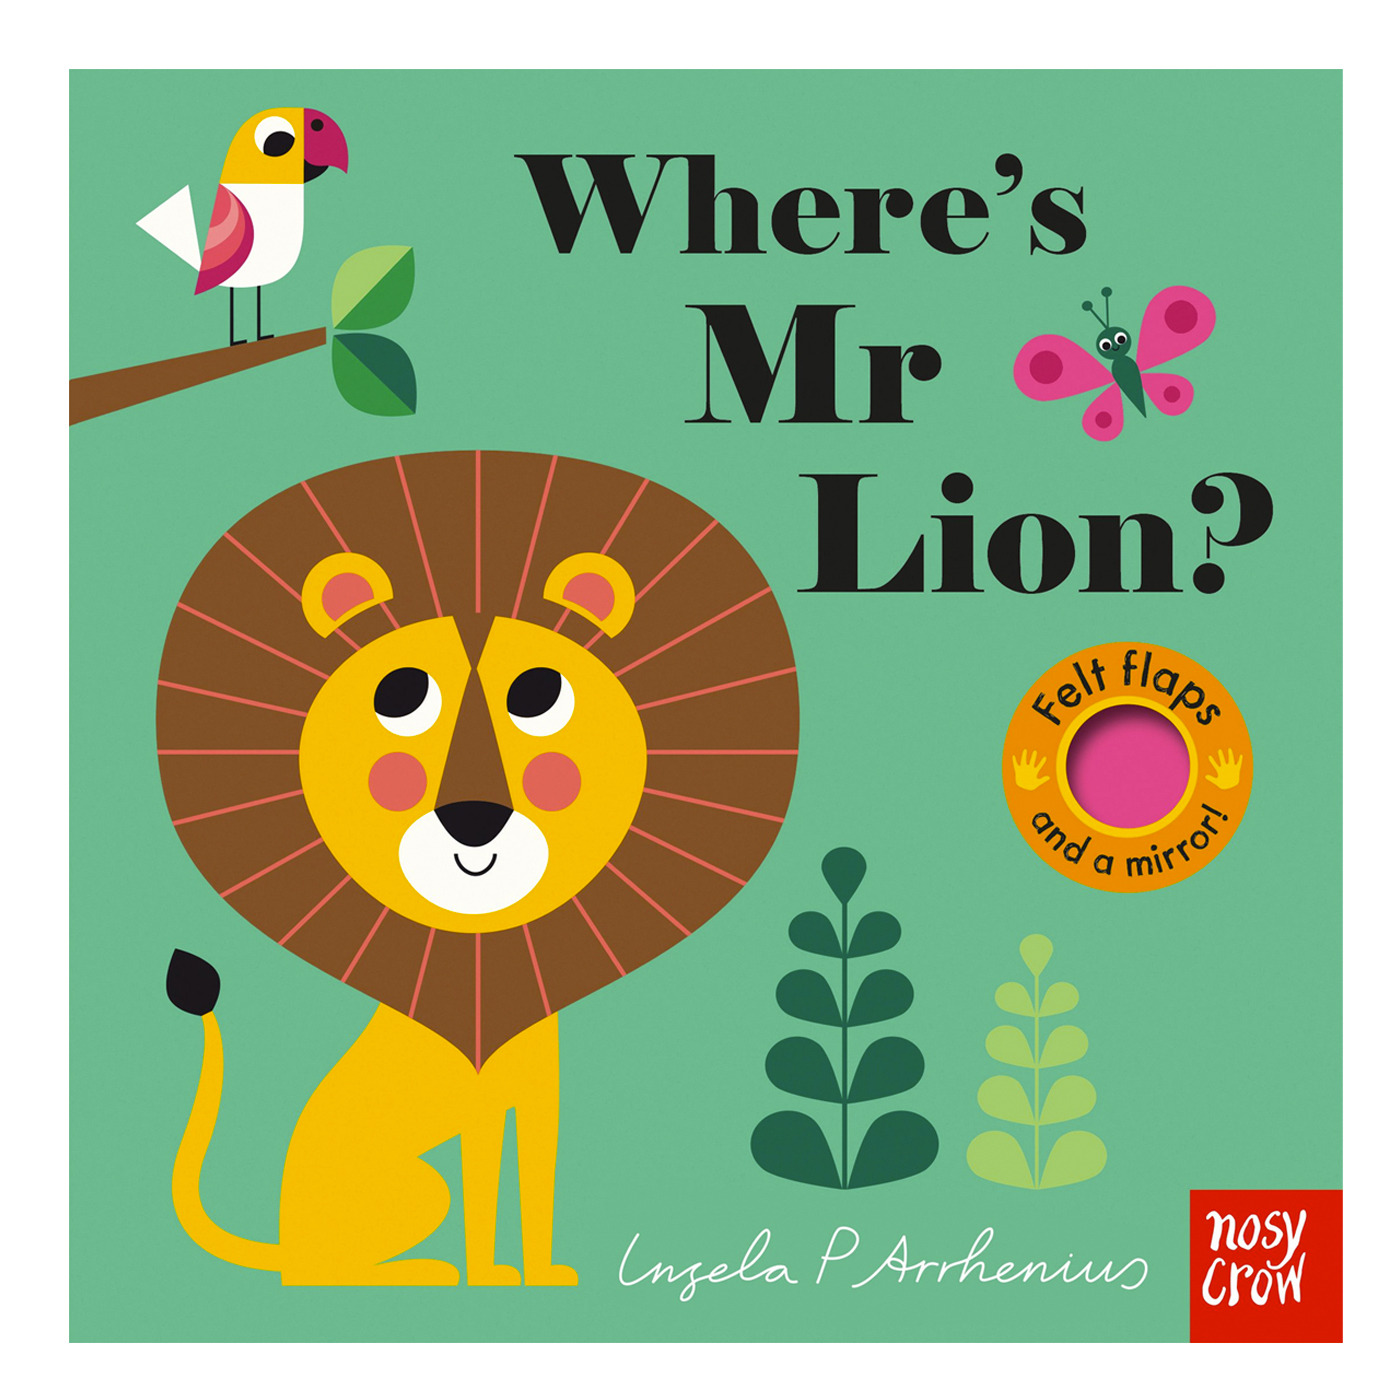  Where's Mr Lion?